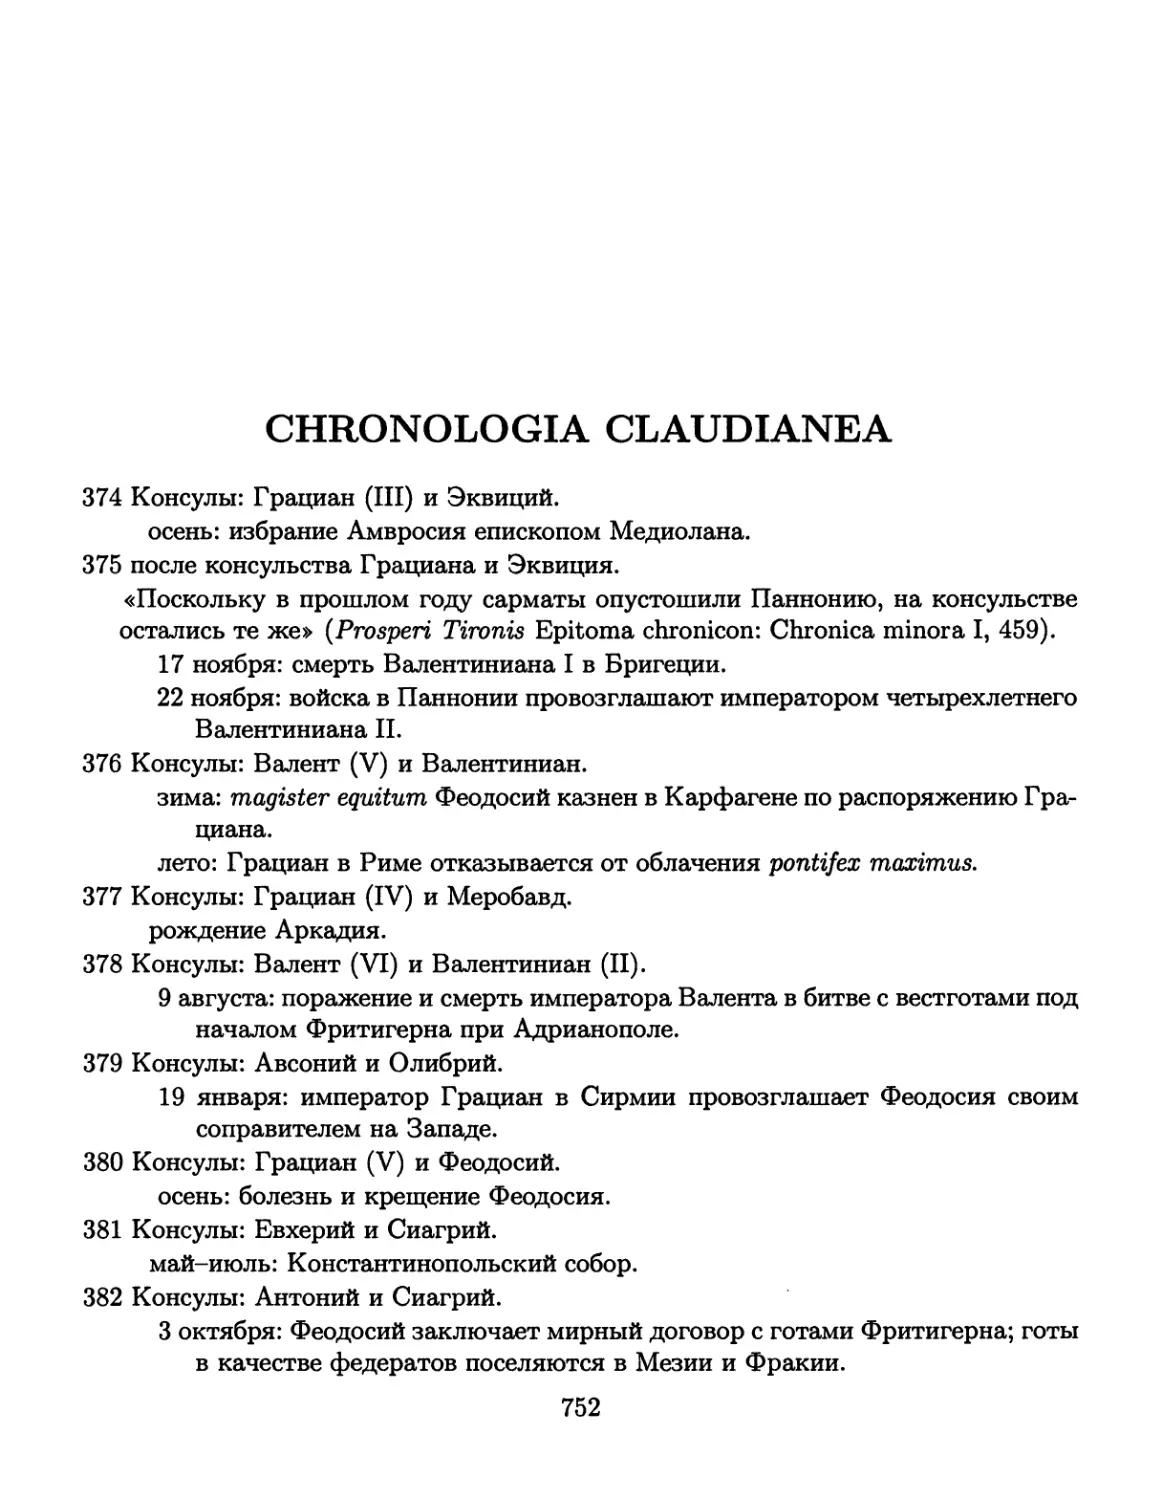 Chronologia Claudianea